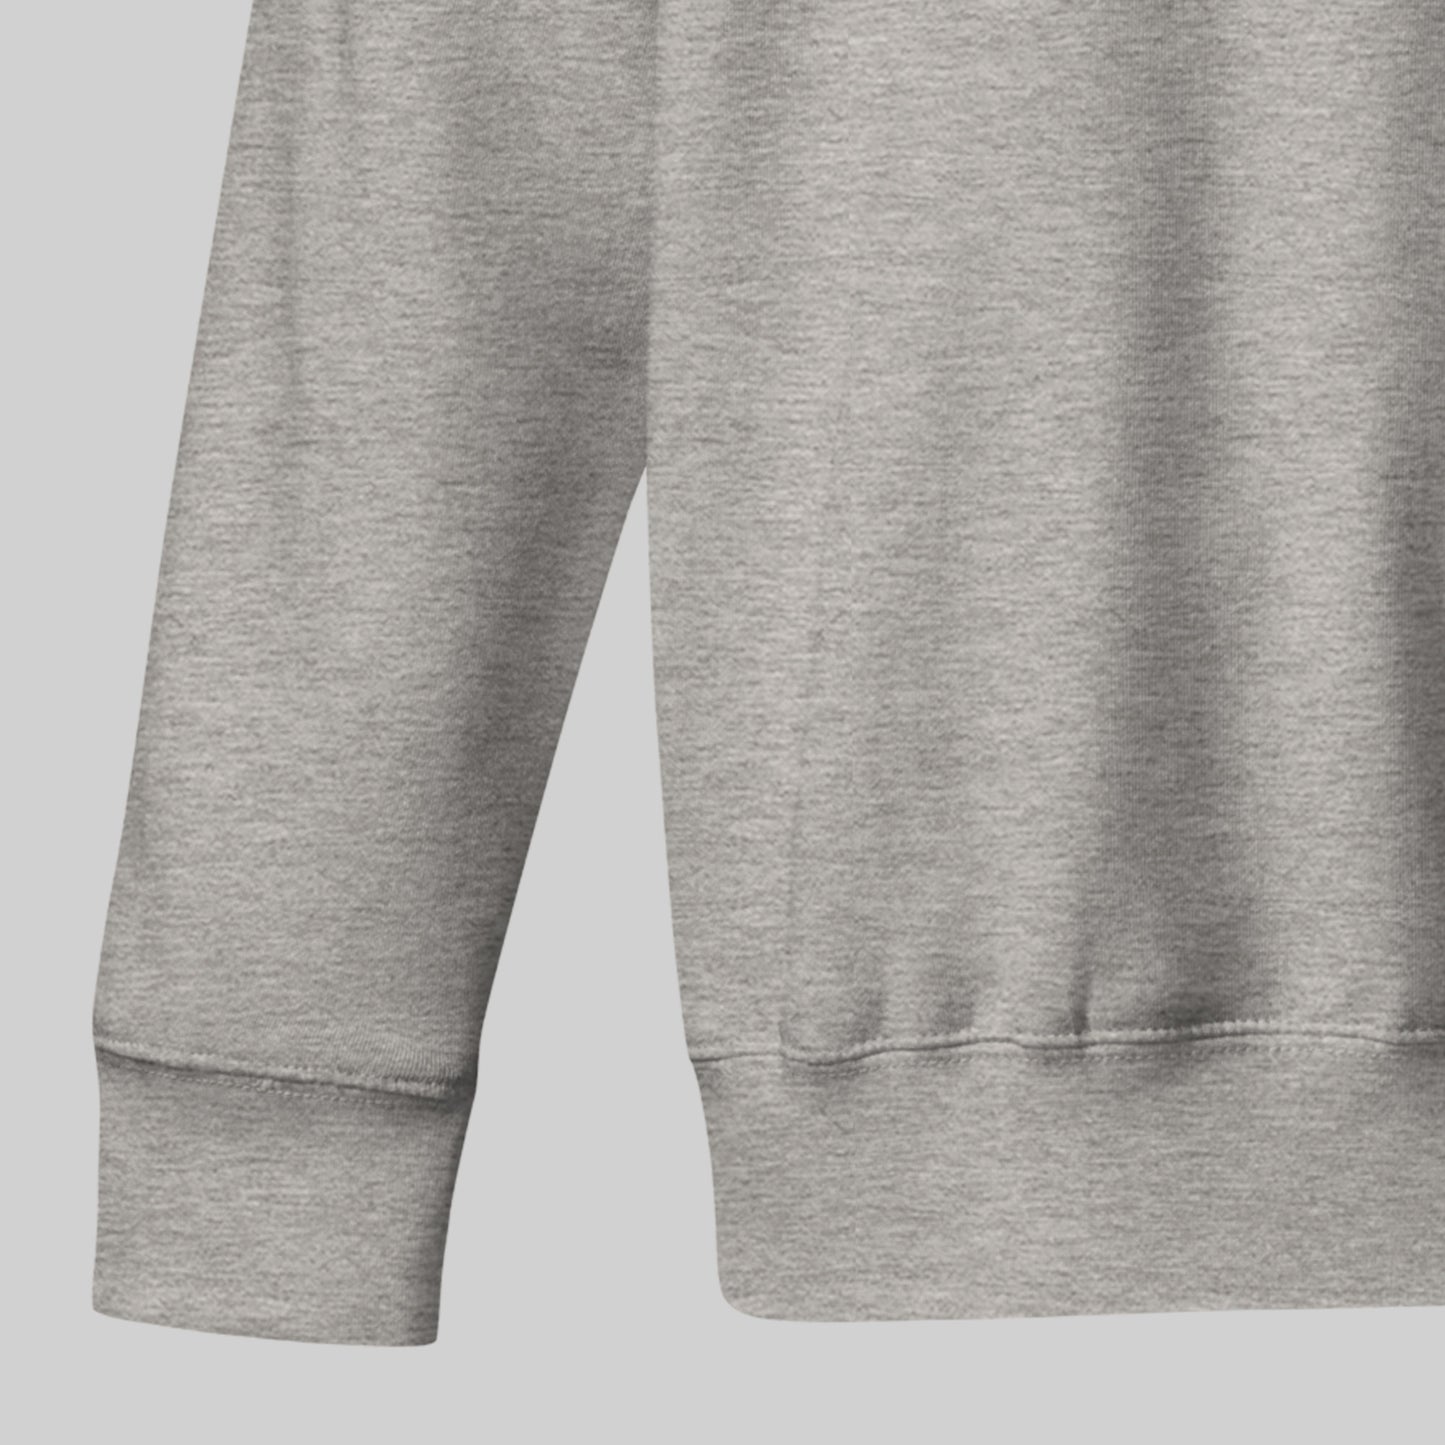 stitch detail on carbon grey Ivory Guard Unisex Premium Sweatshirt